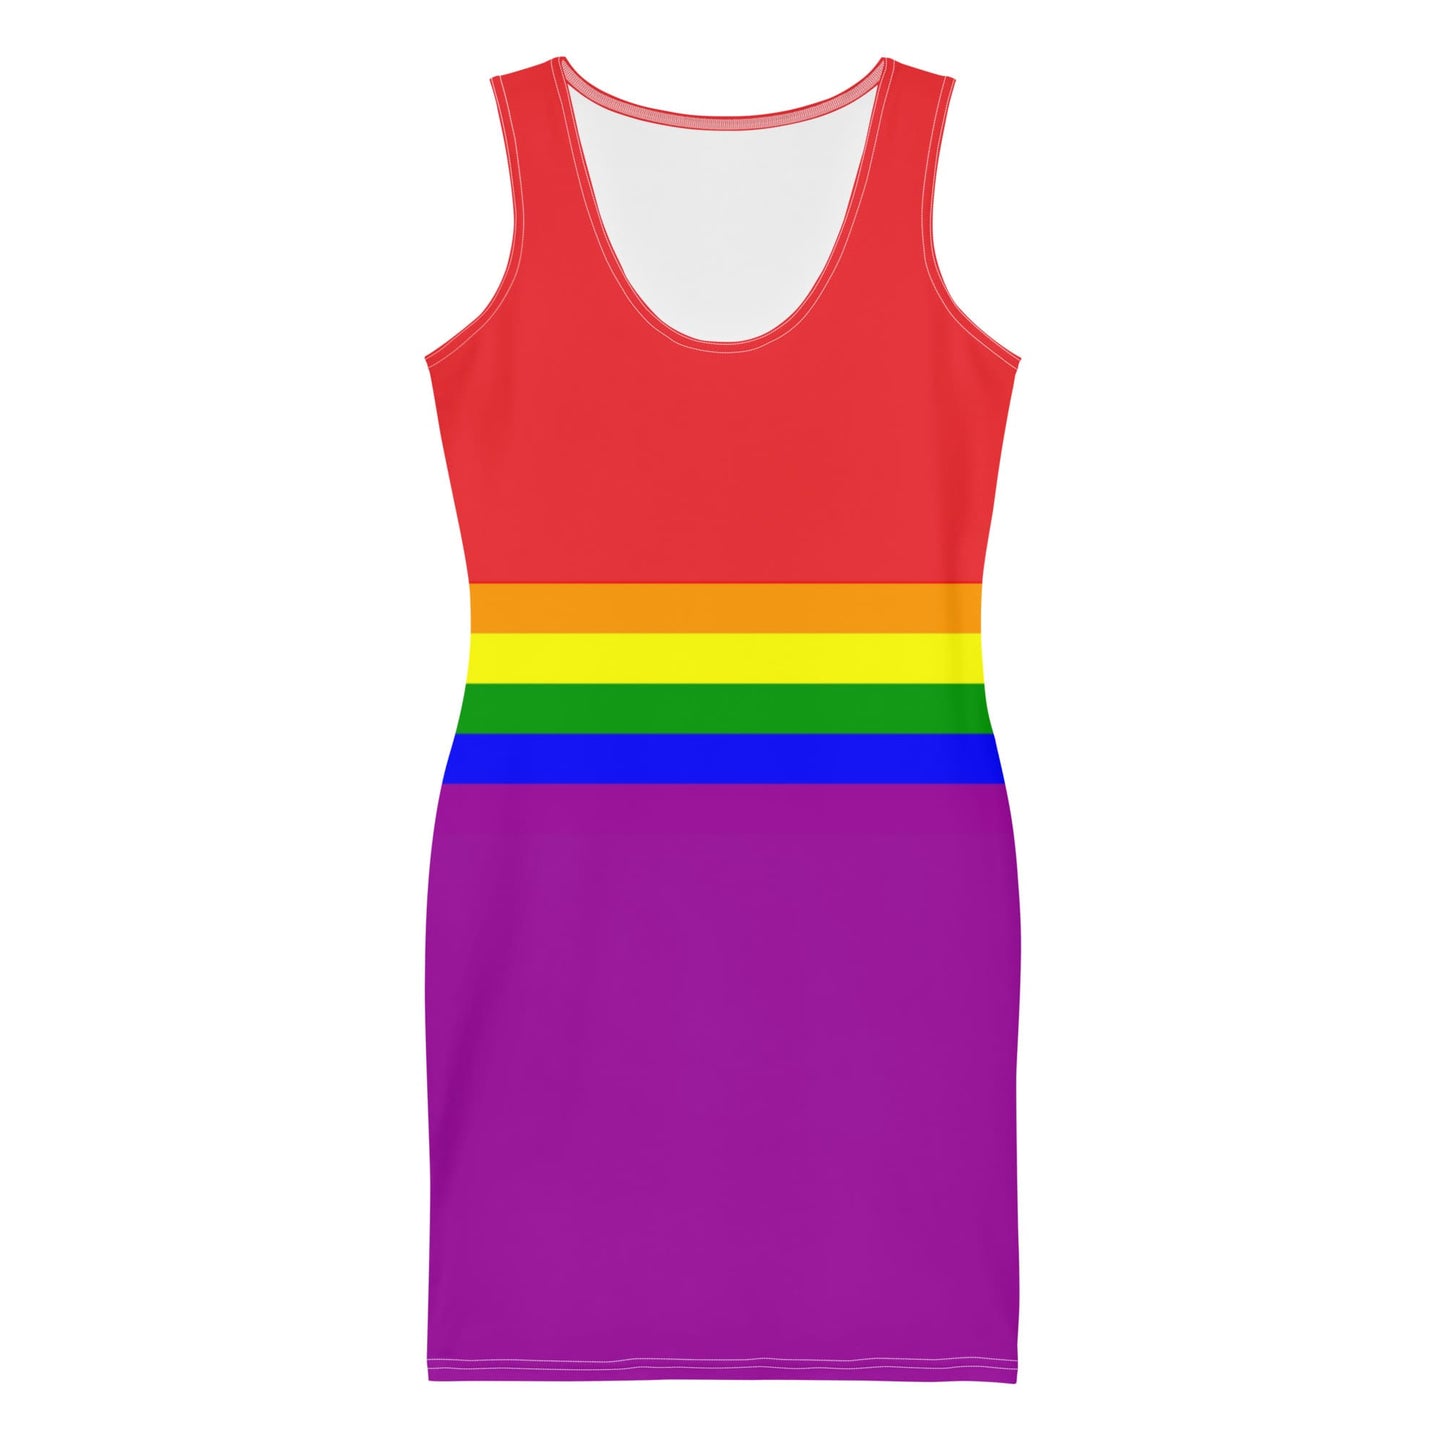 LGBT pride dress, flatlay front